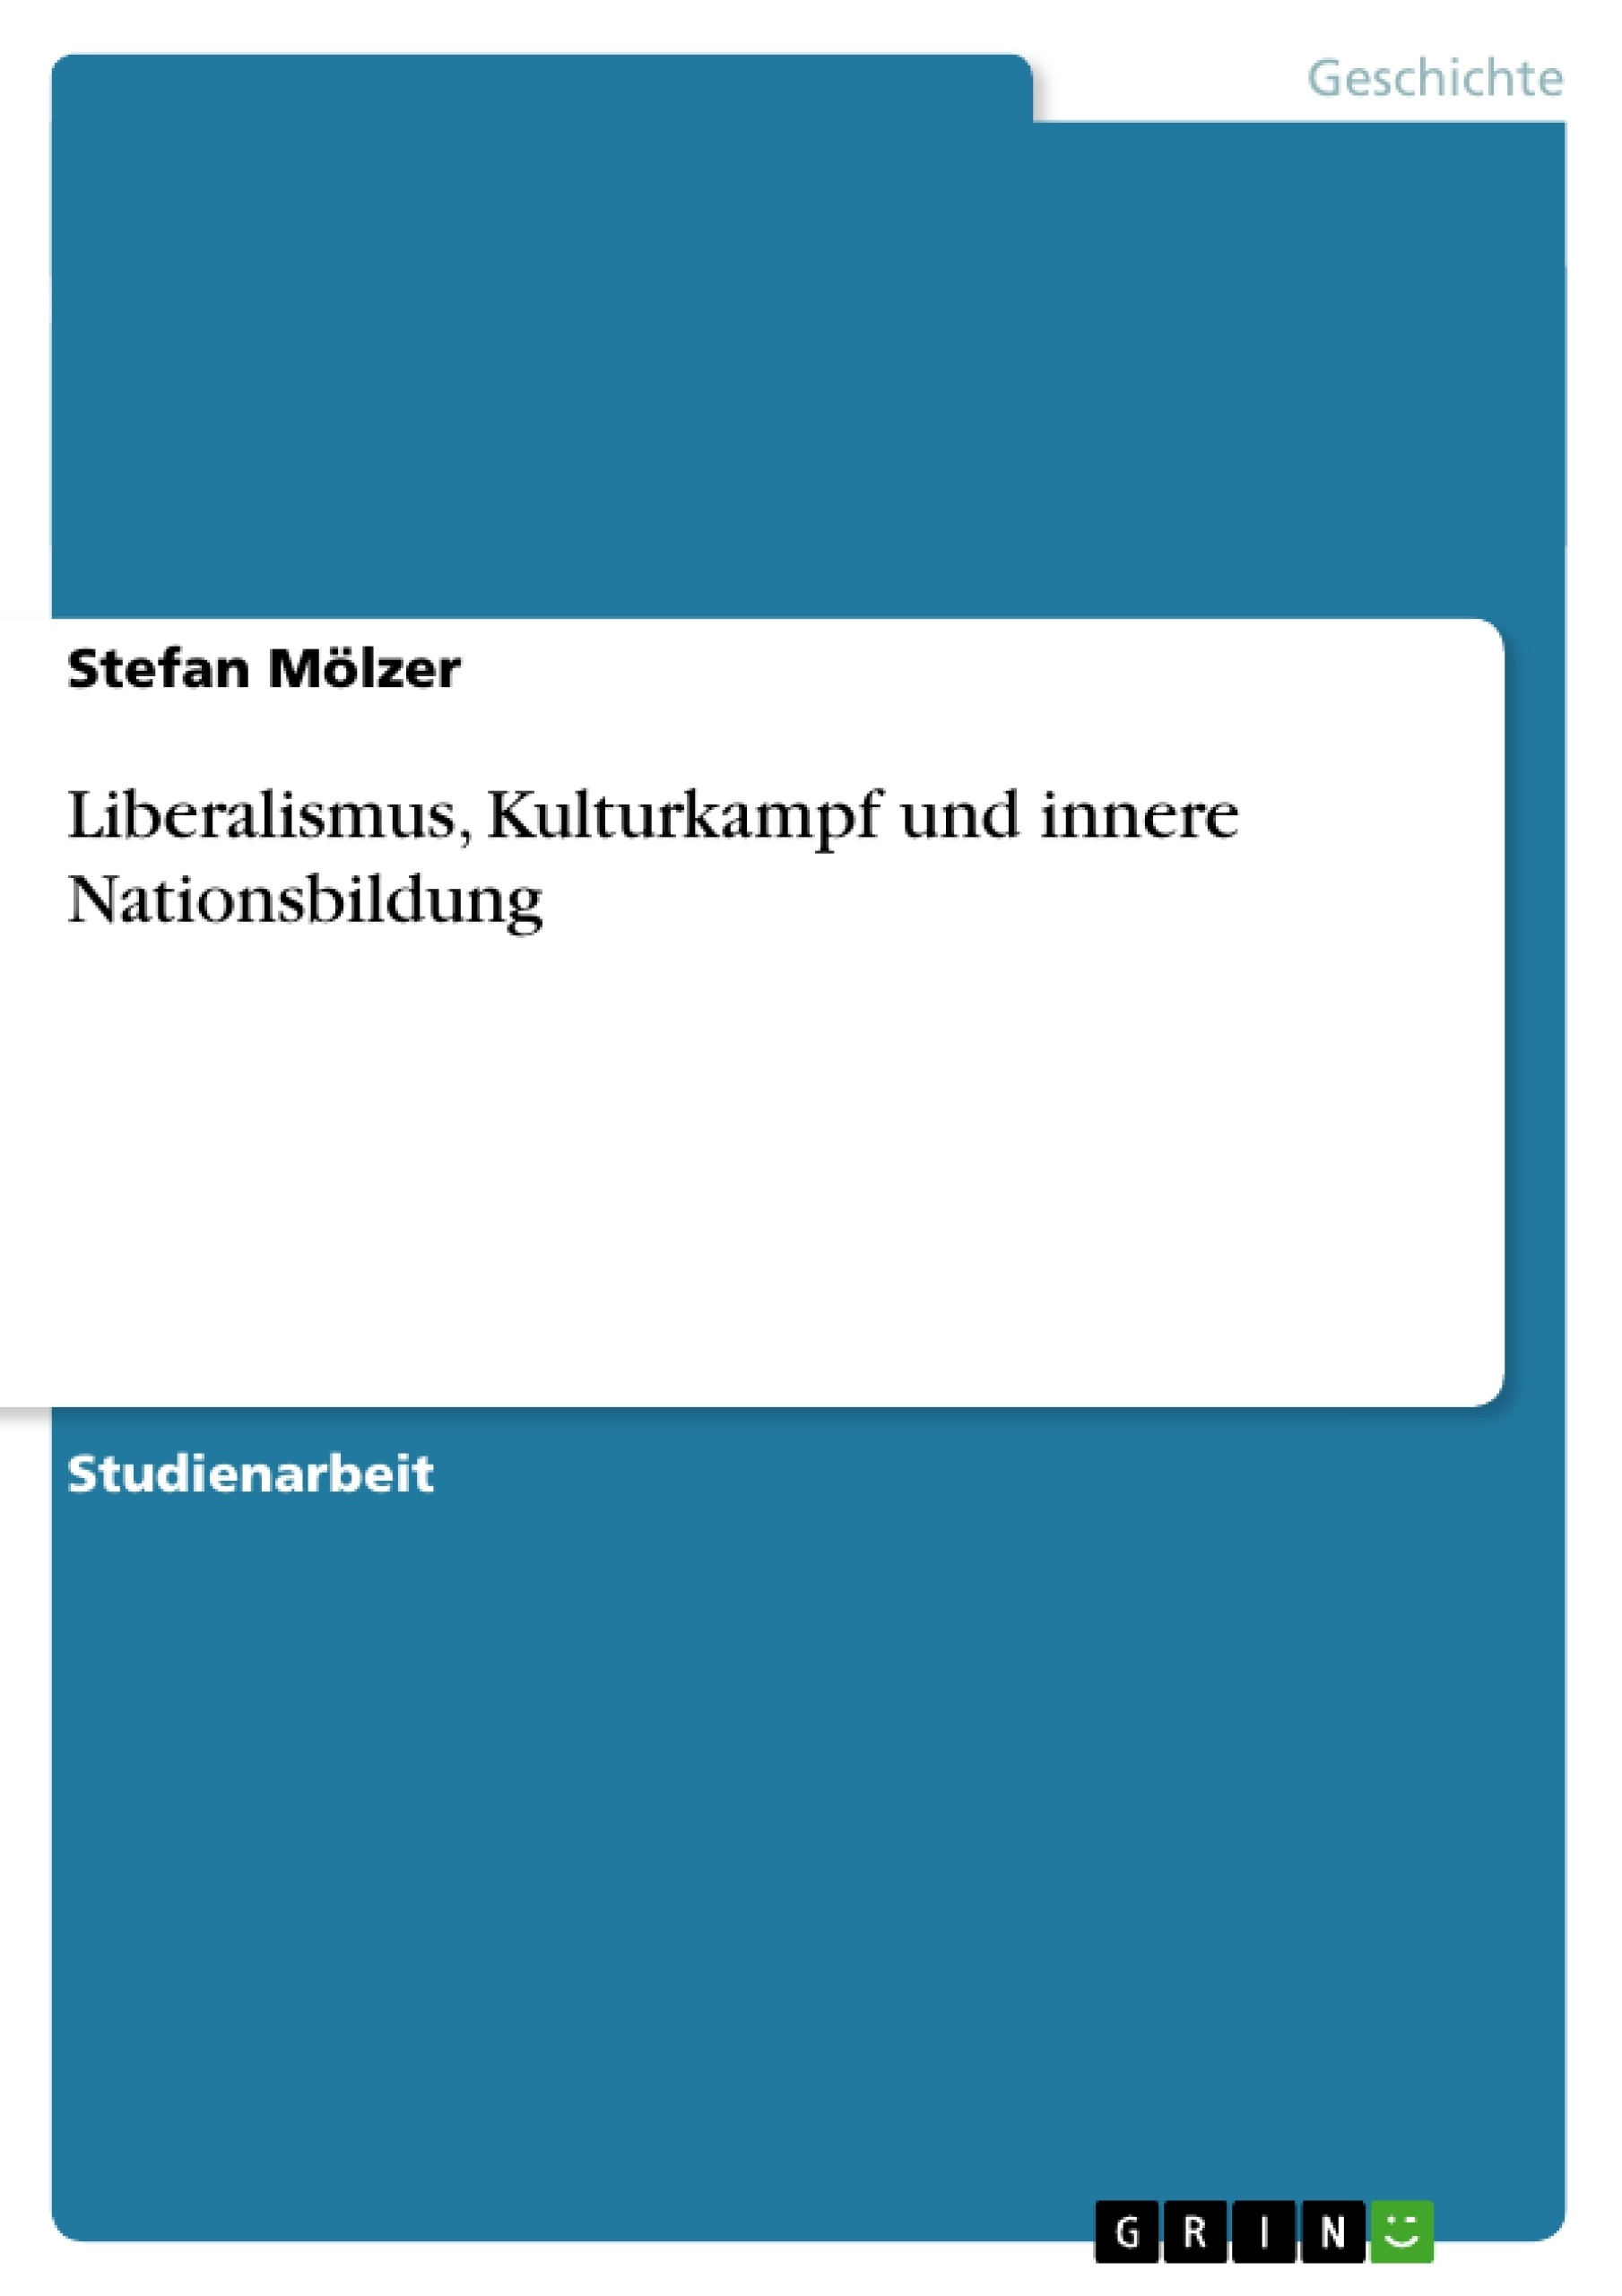 Title: Liberalismus, Kulturkampf und innere Nationsbildung